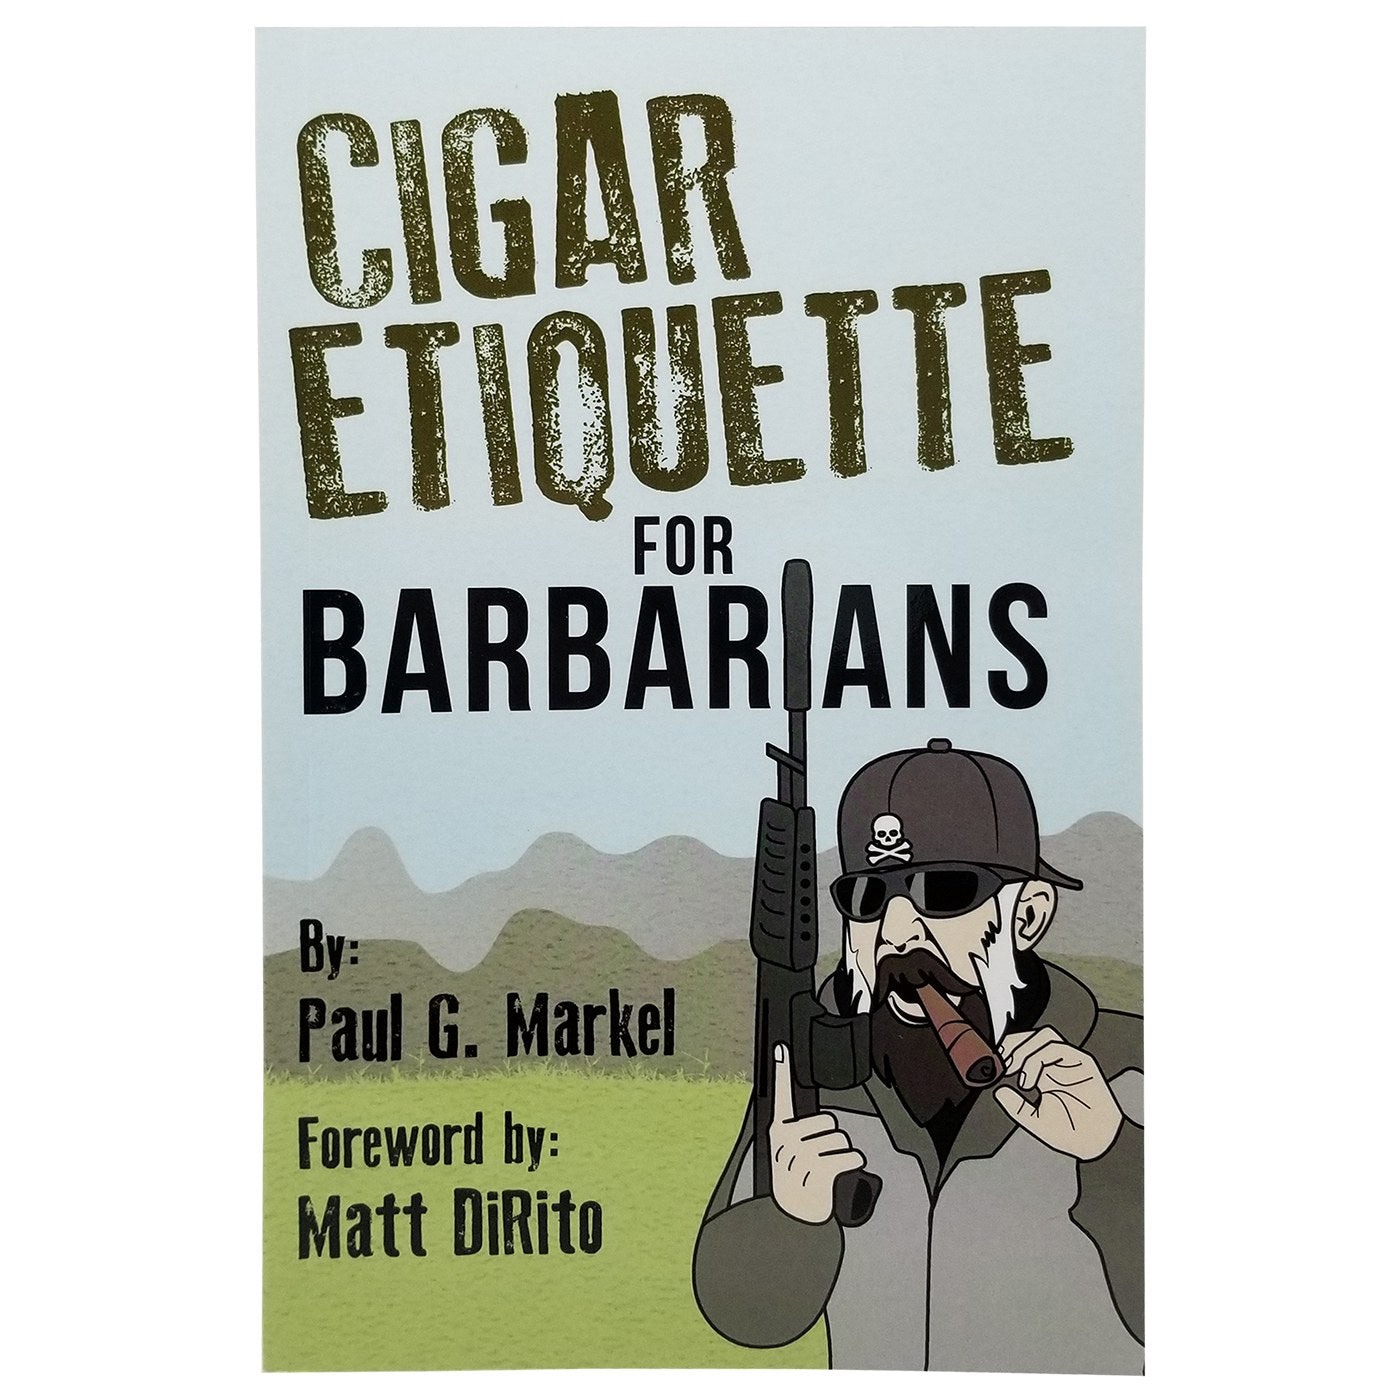 Cigar Etiquette for Barbarians